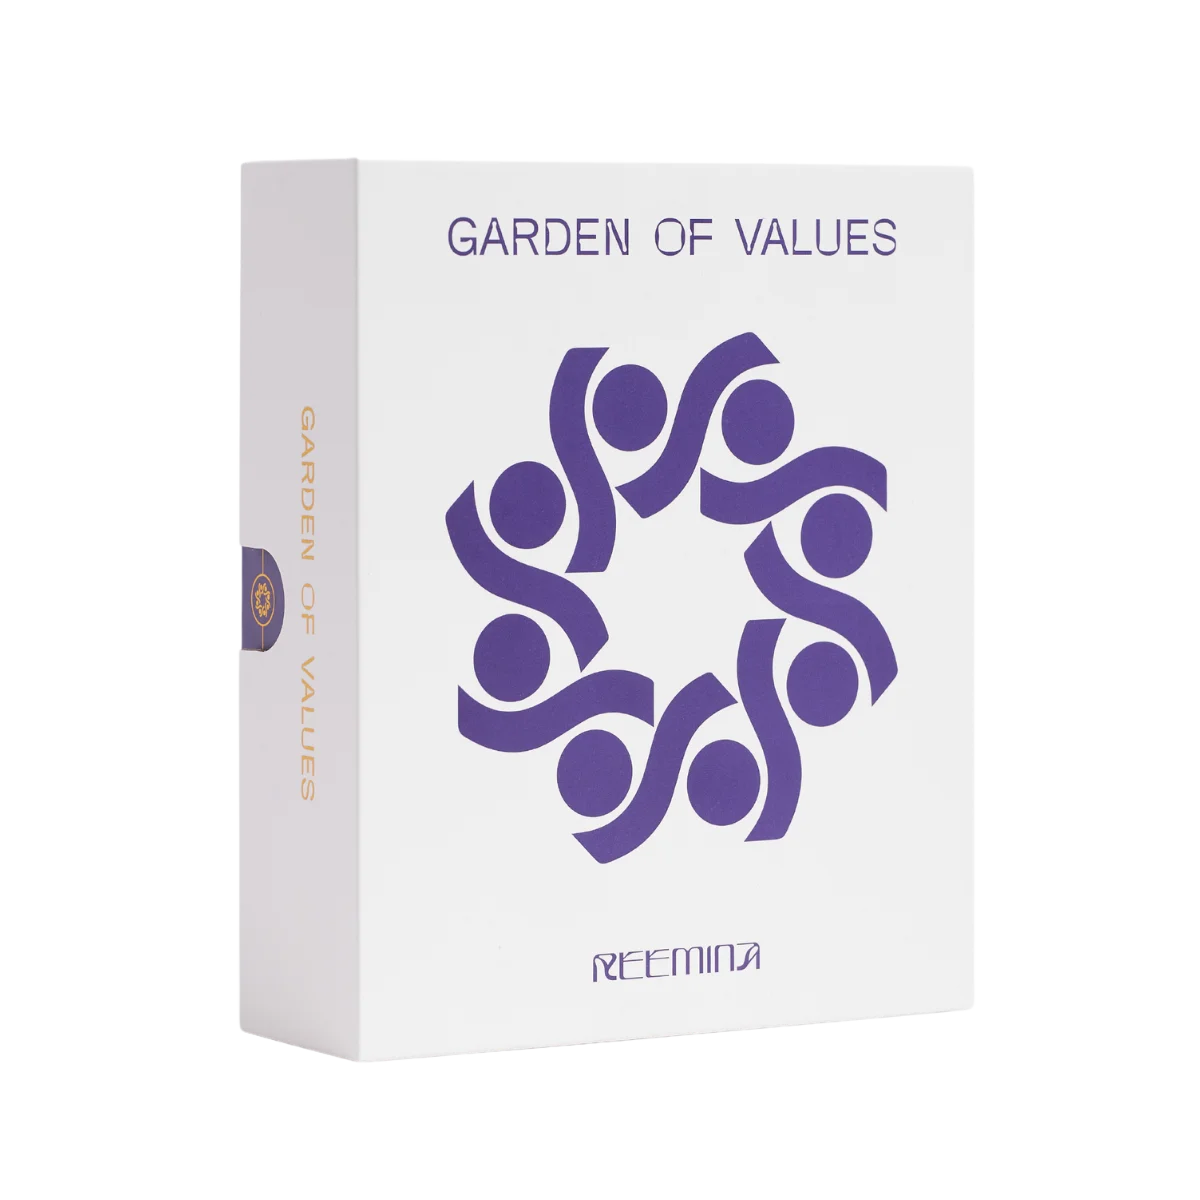 Garden of Values: Card deck by Reemina